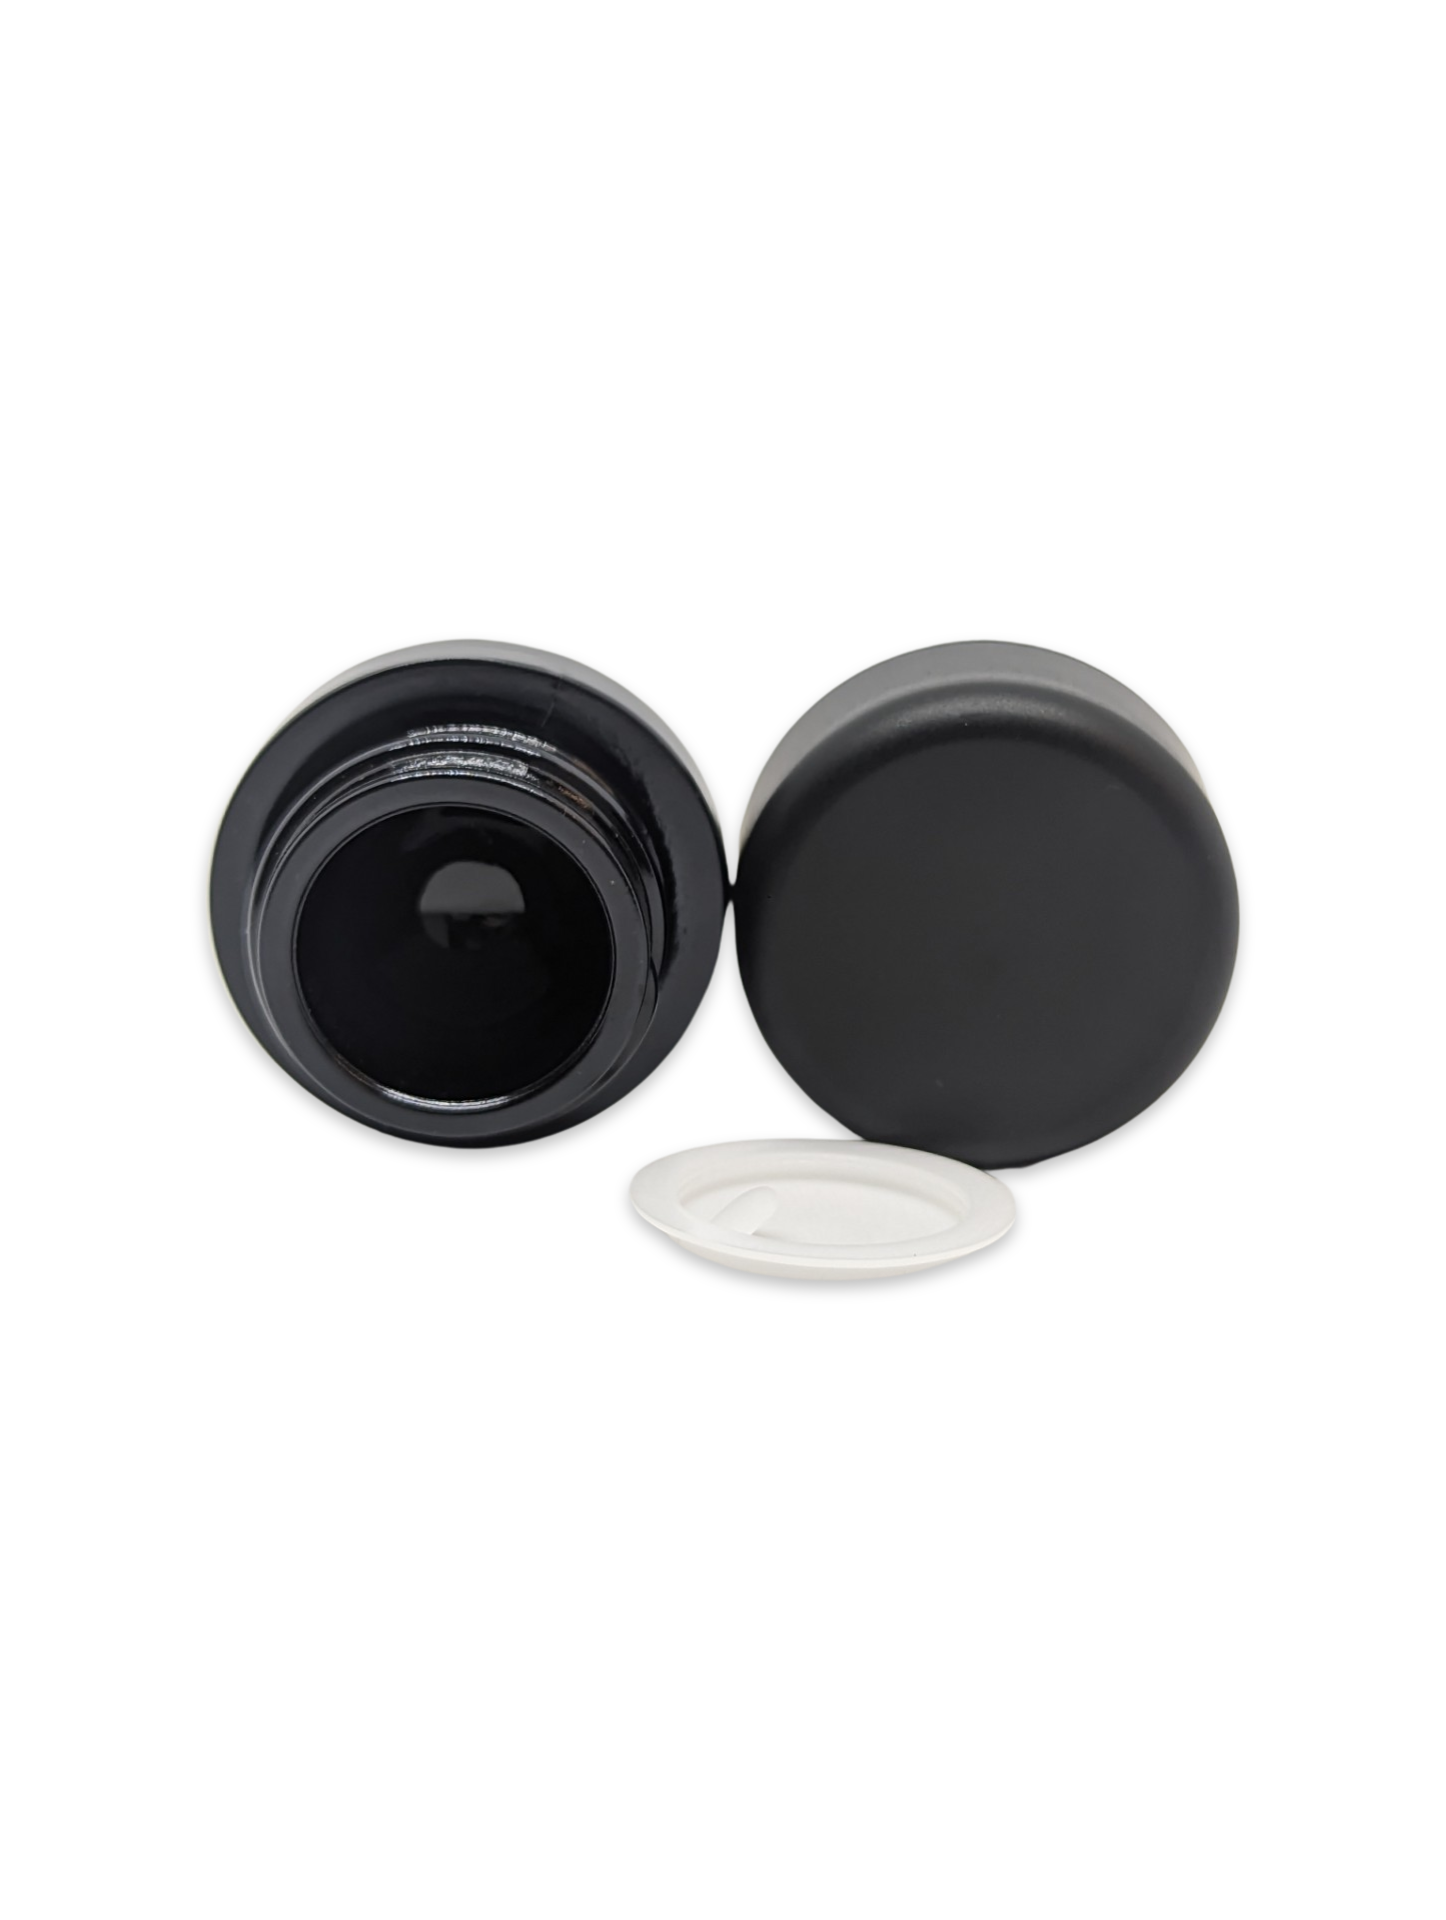 5ml Round Glass Shoulderless Screw Top Jars | Child Resistant Lid | Black Glass, Black Lid